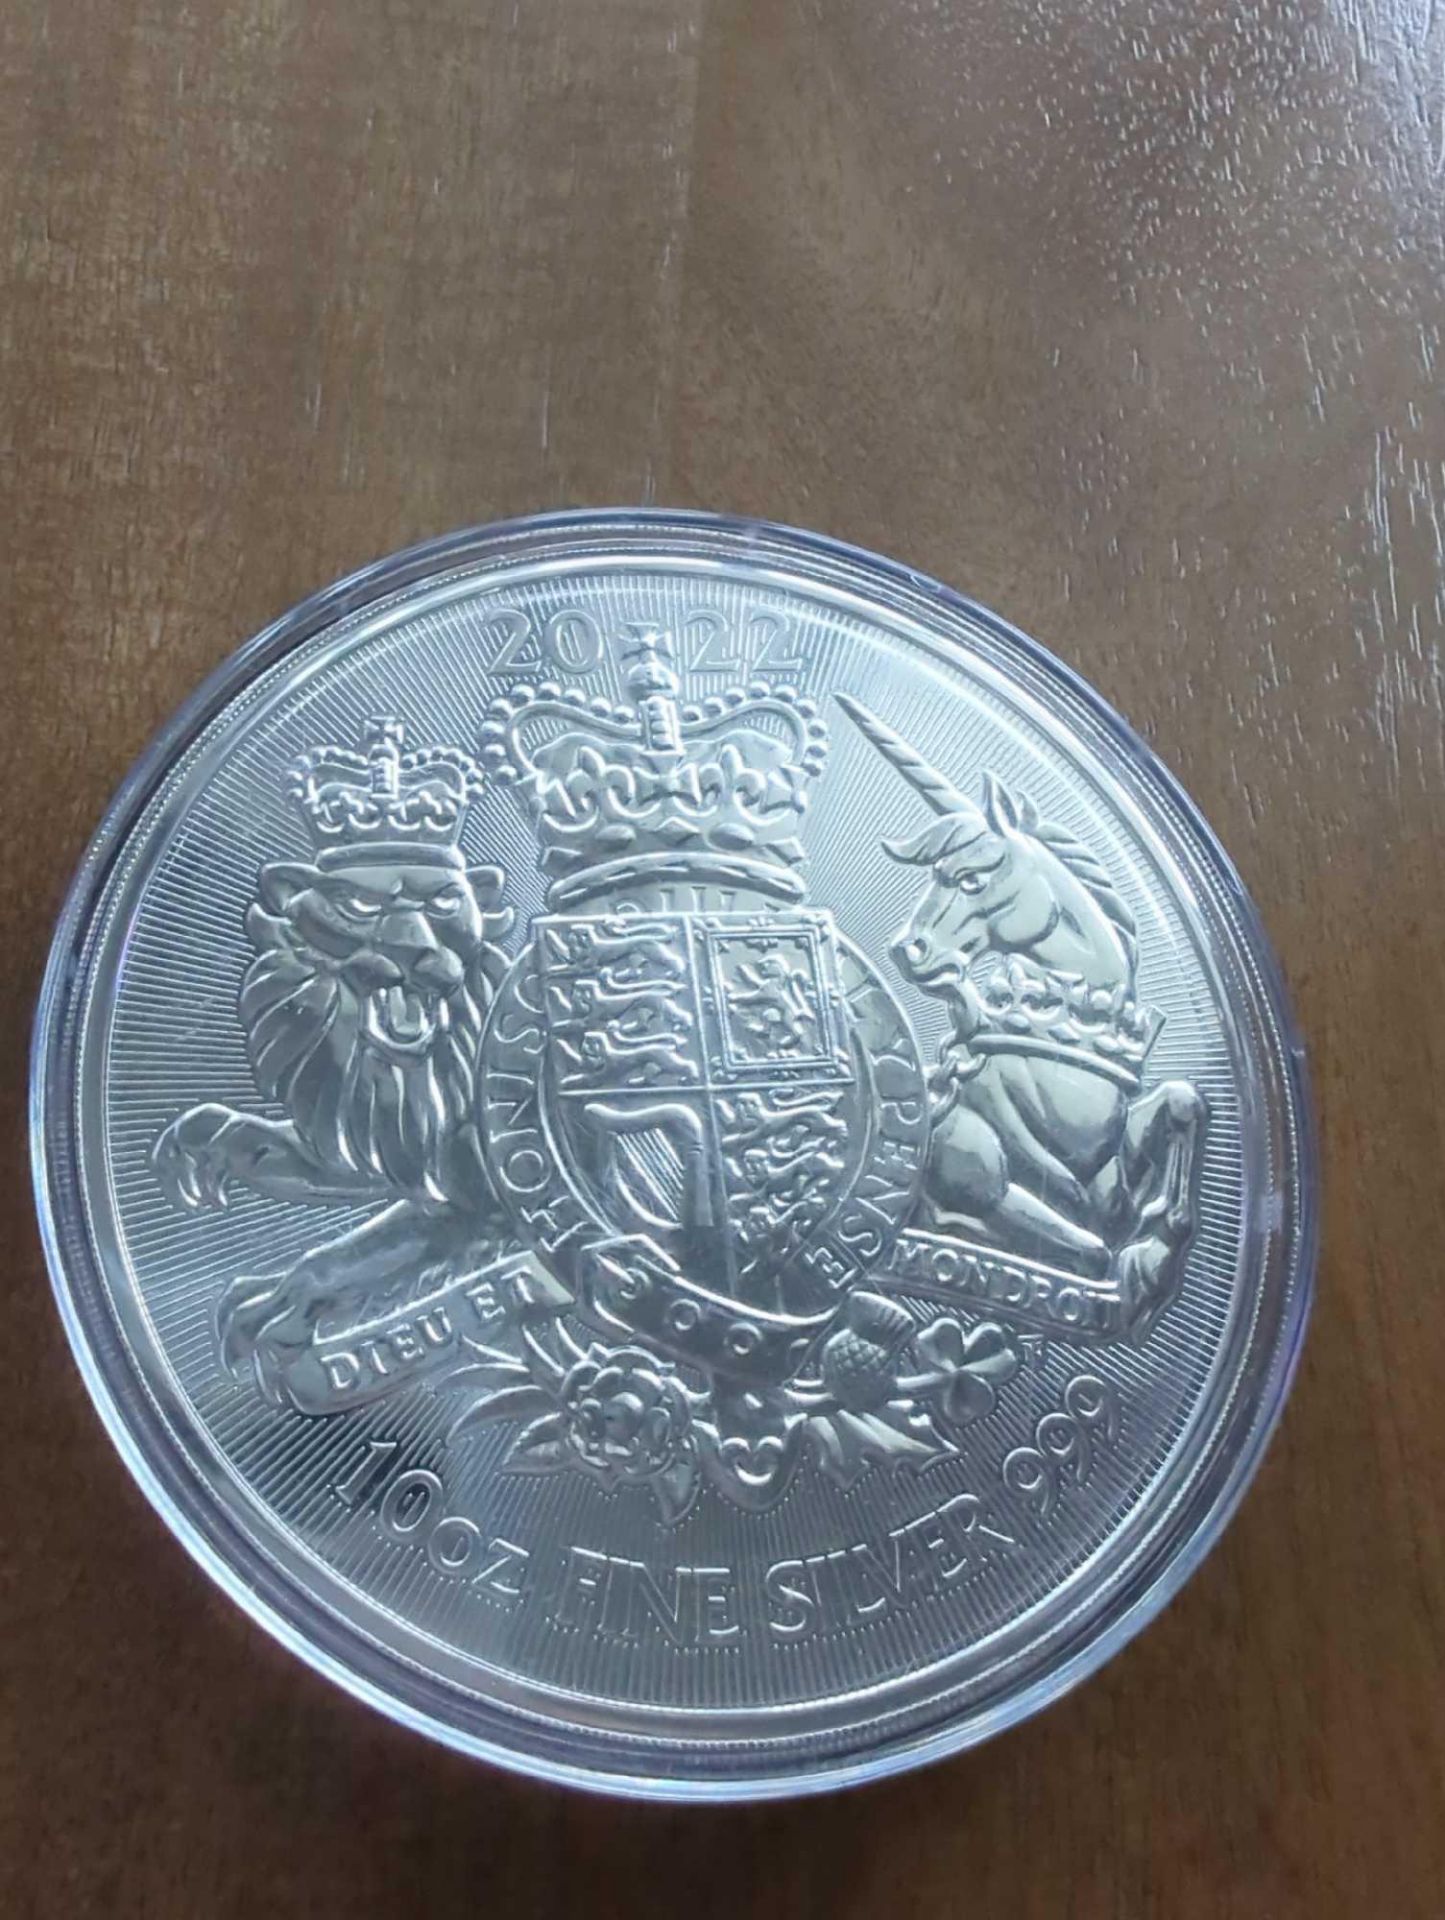 10 oz British Silver Royal Arms Coin - Image 2 of 5